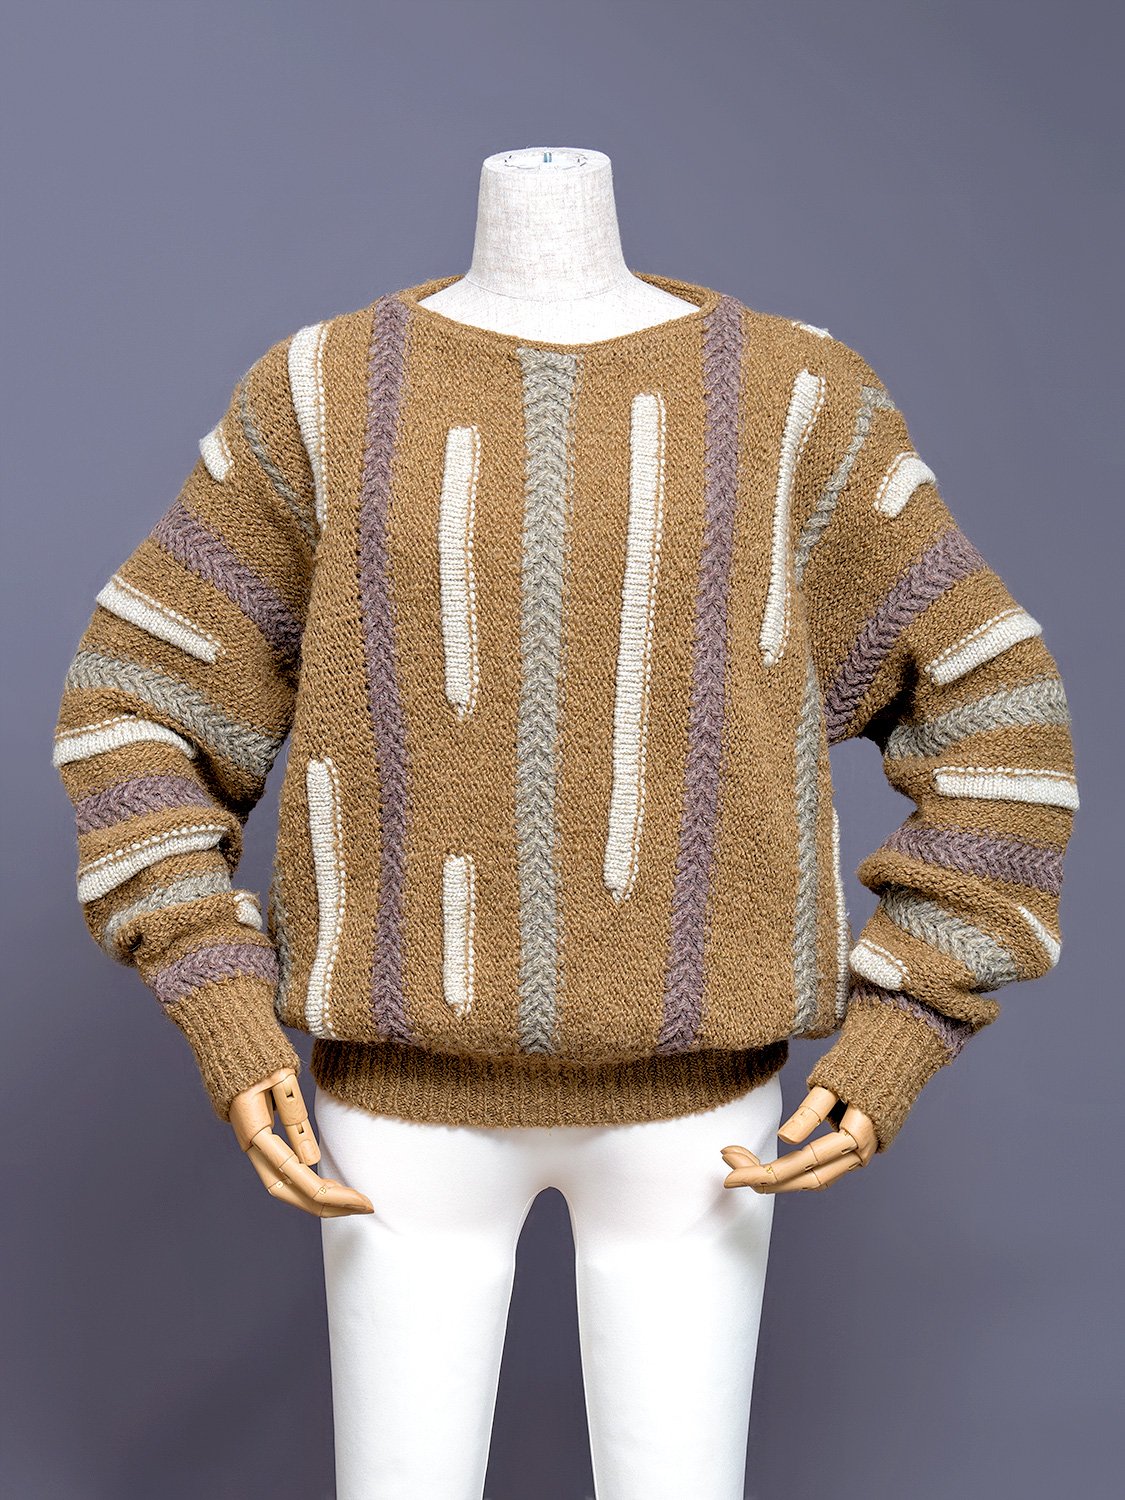 Issey Miyake Knit Sweater, 1980s | Japanese Fashion Archive